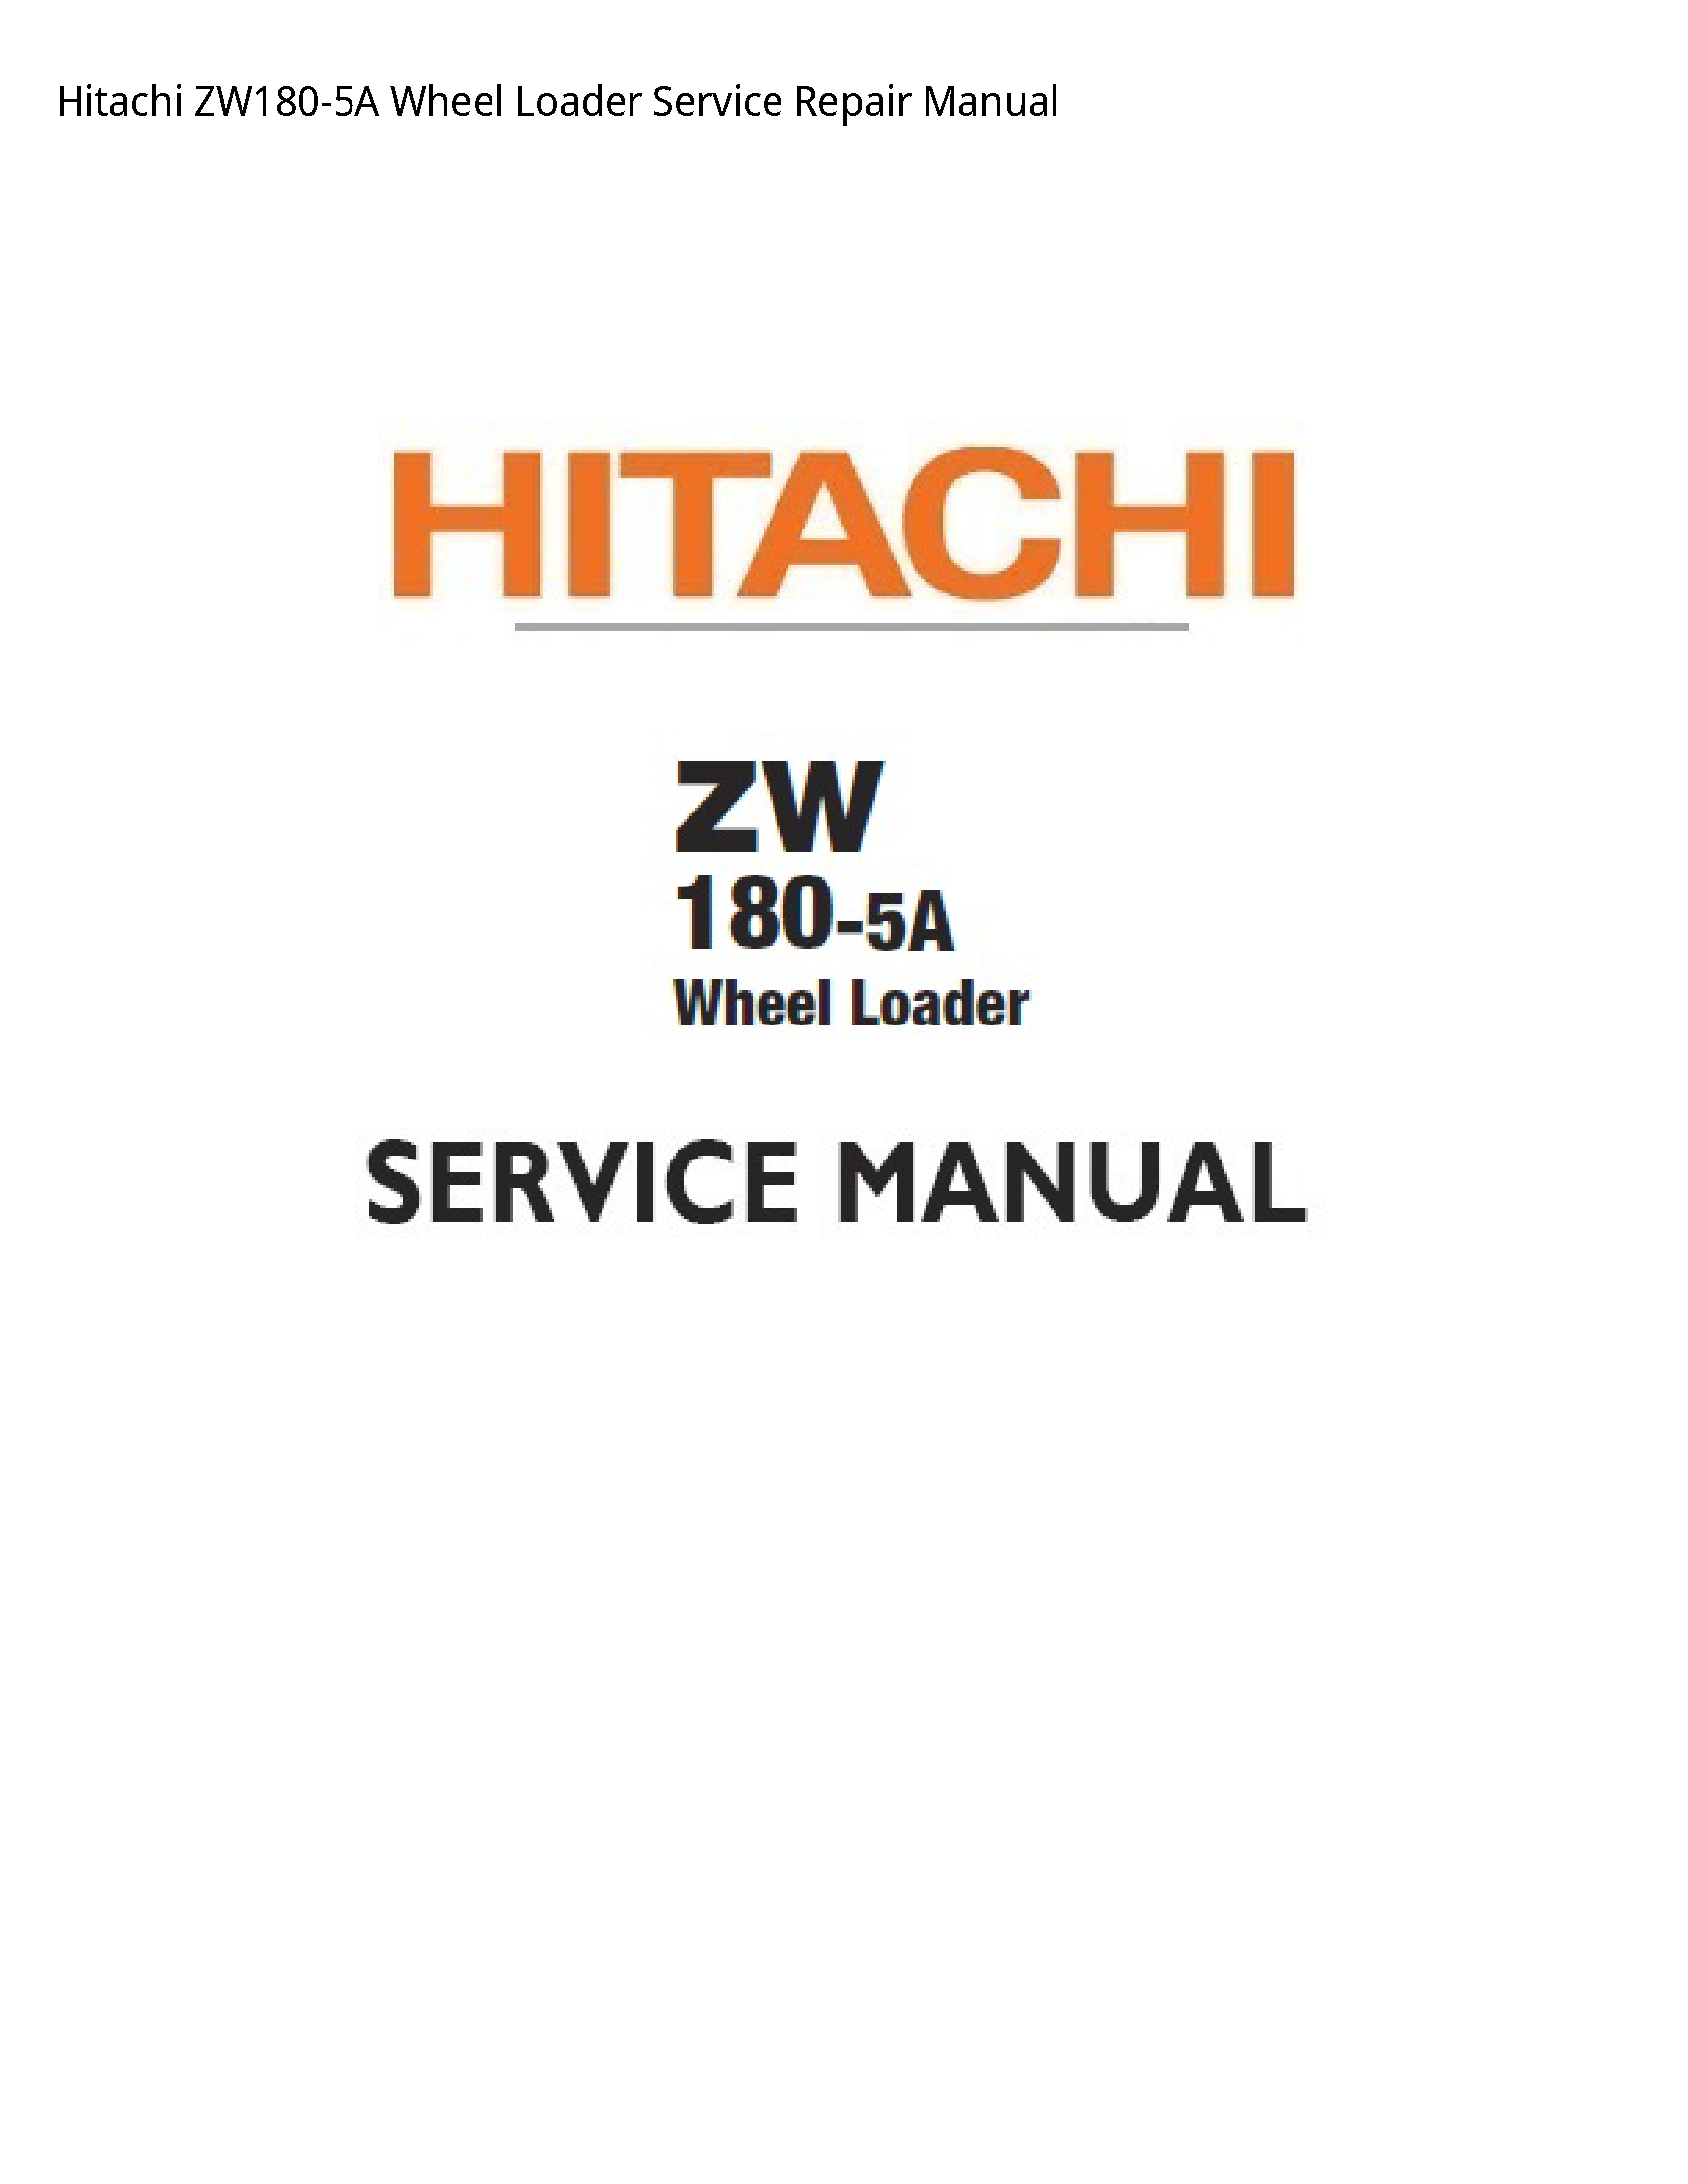 Hitachi ZW180-5A Wheel Loader manual